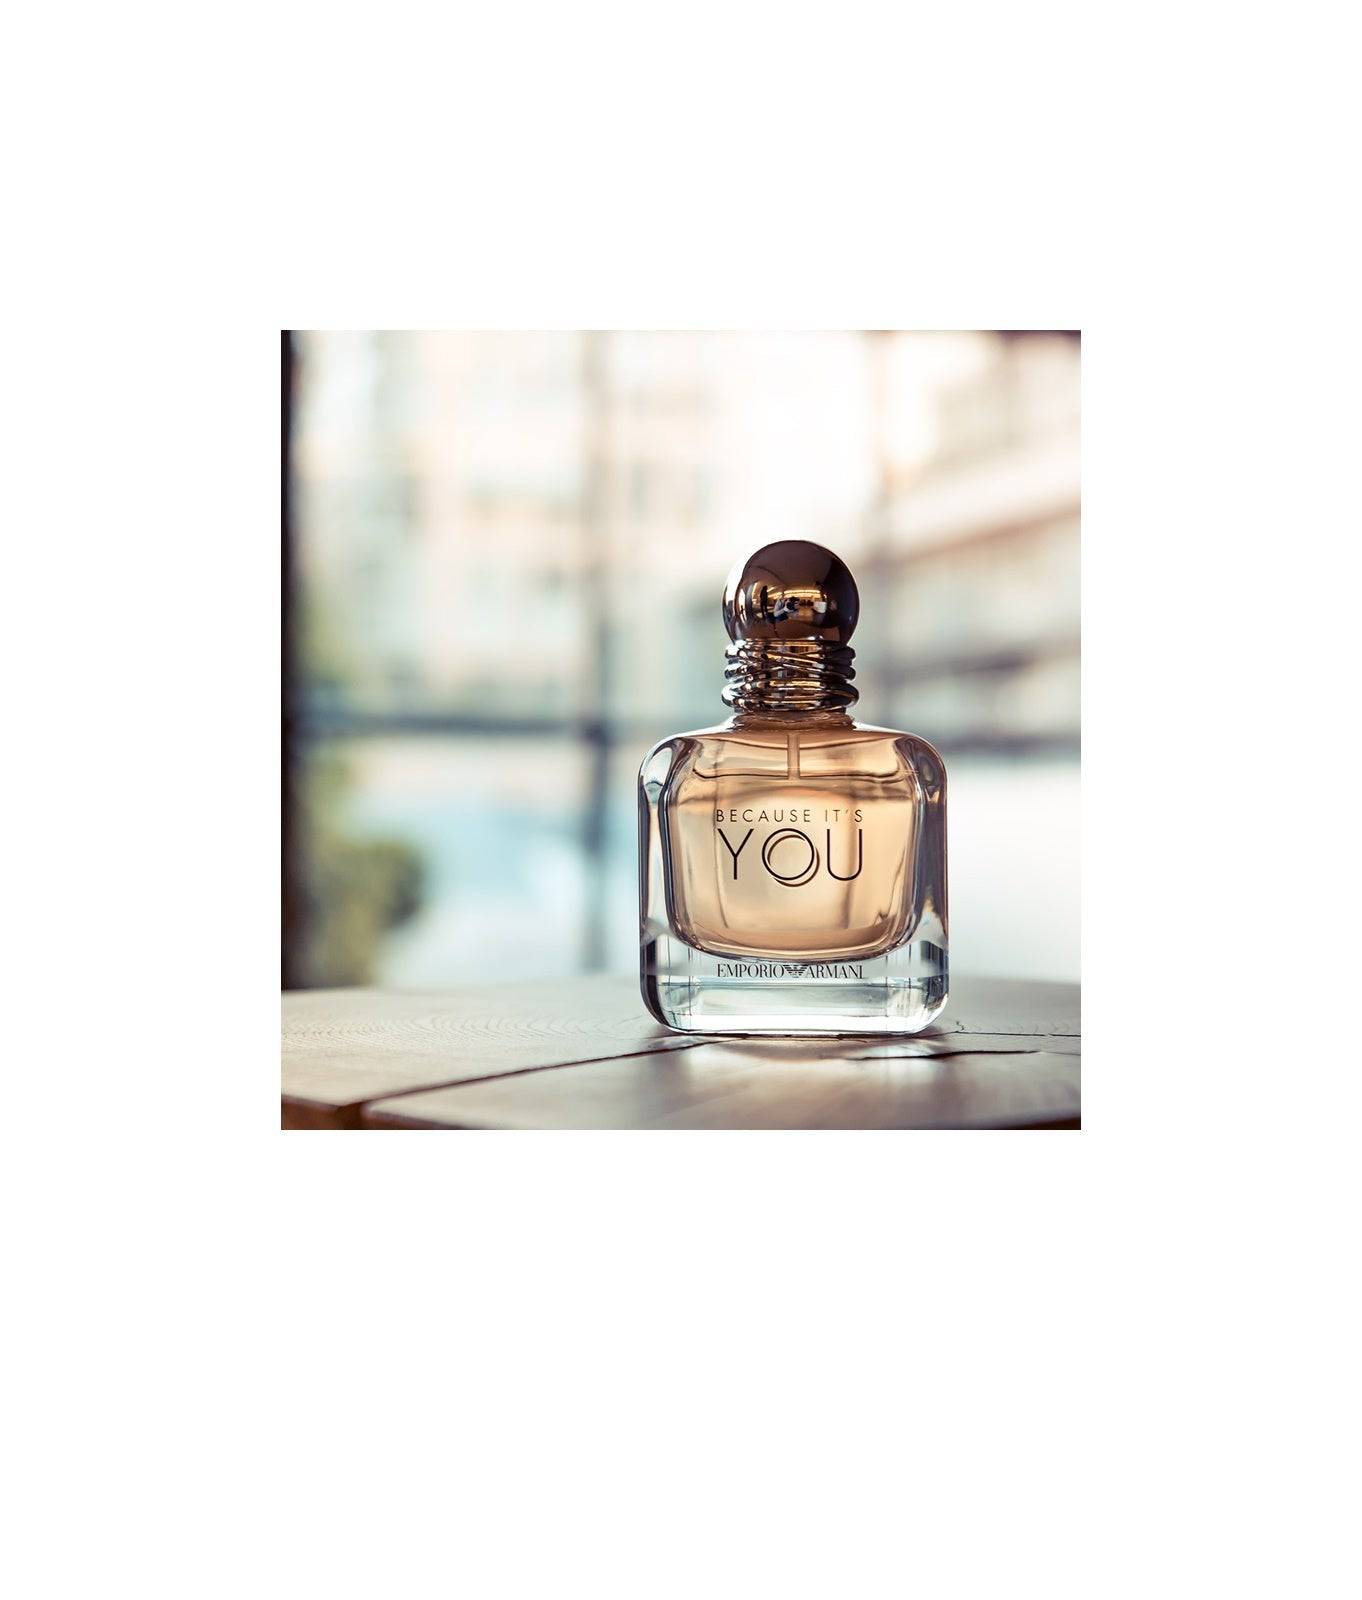 Armani Emporio Because It&#39;s You - Jasmine Parfums- [ean]